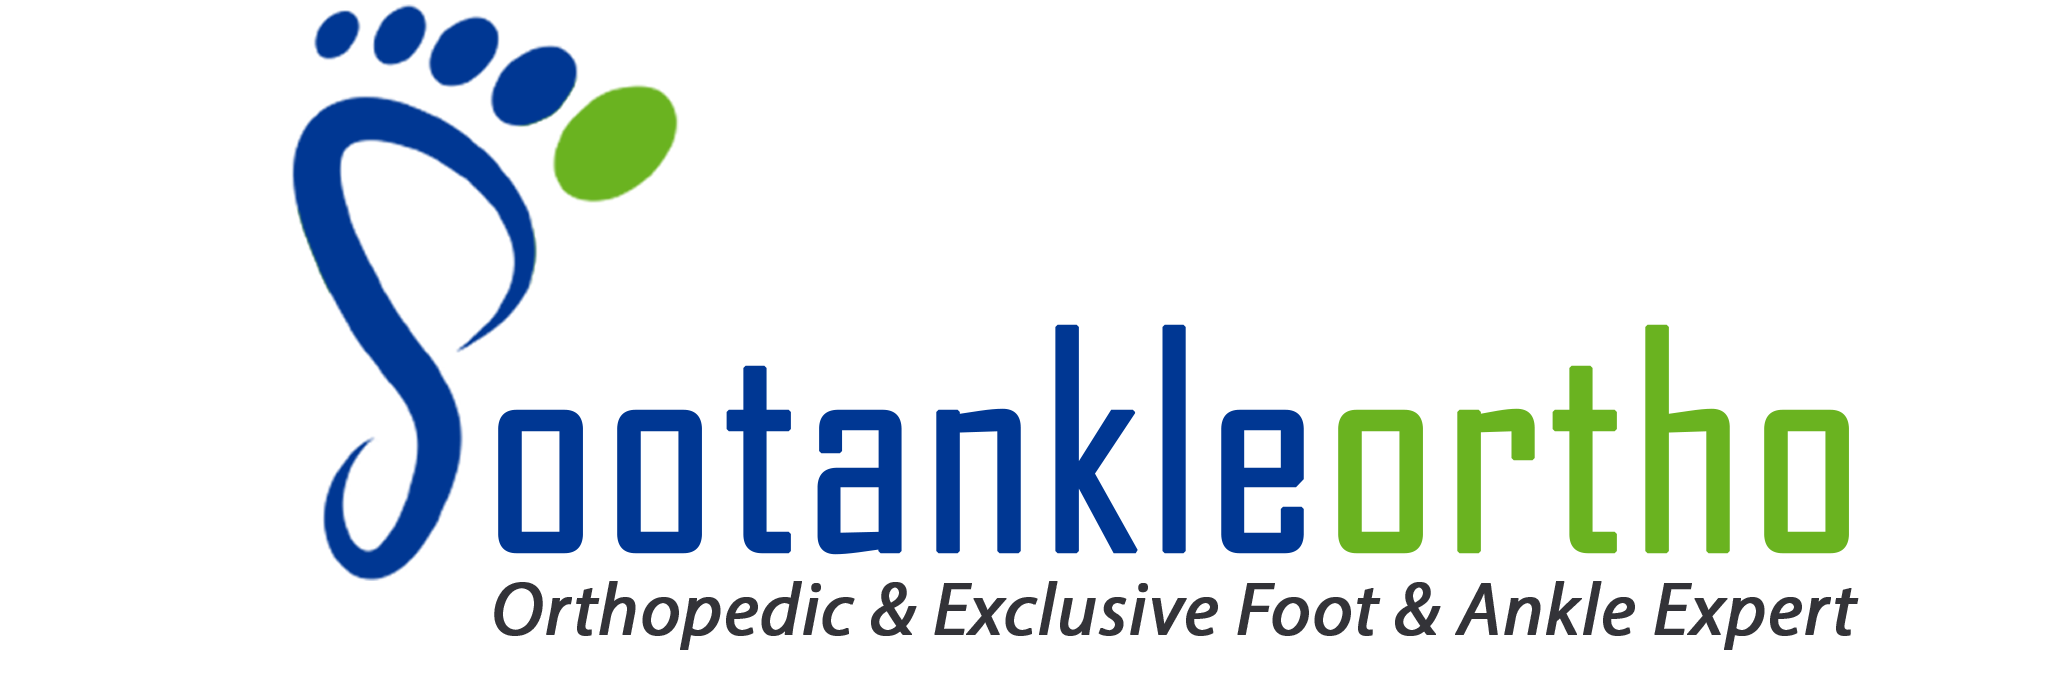 Foot & ankle Logo Final